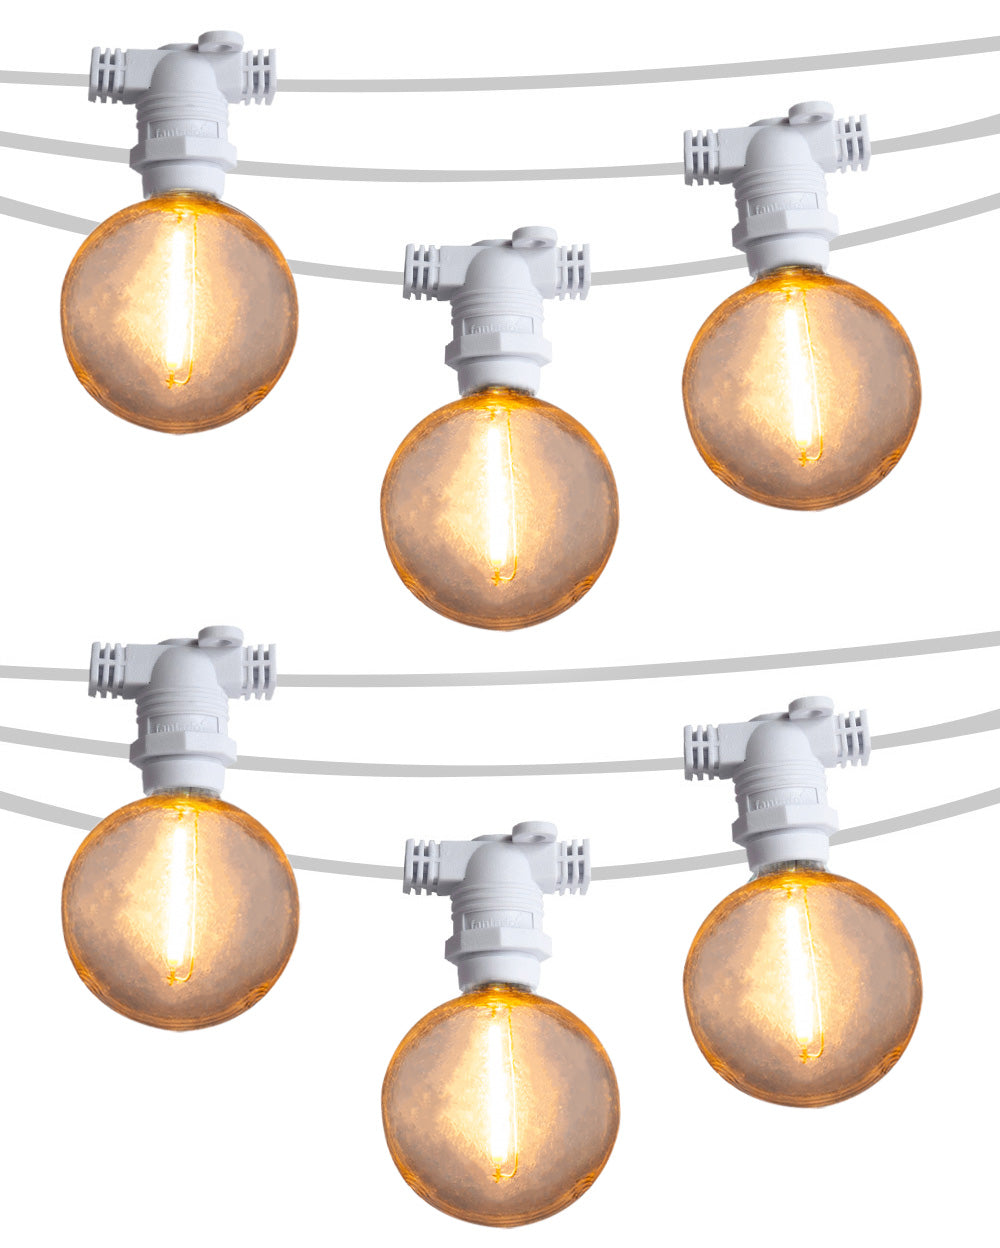 25 Socket Outdoor Commercial String Light Set, Shatterproof LED Bulbs, 29 FT White Cord w/ E12 C7 Base, Weatherproof